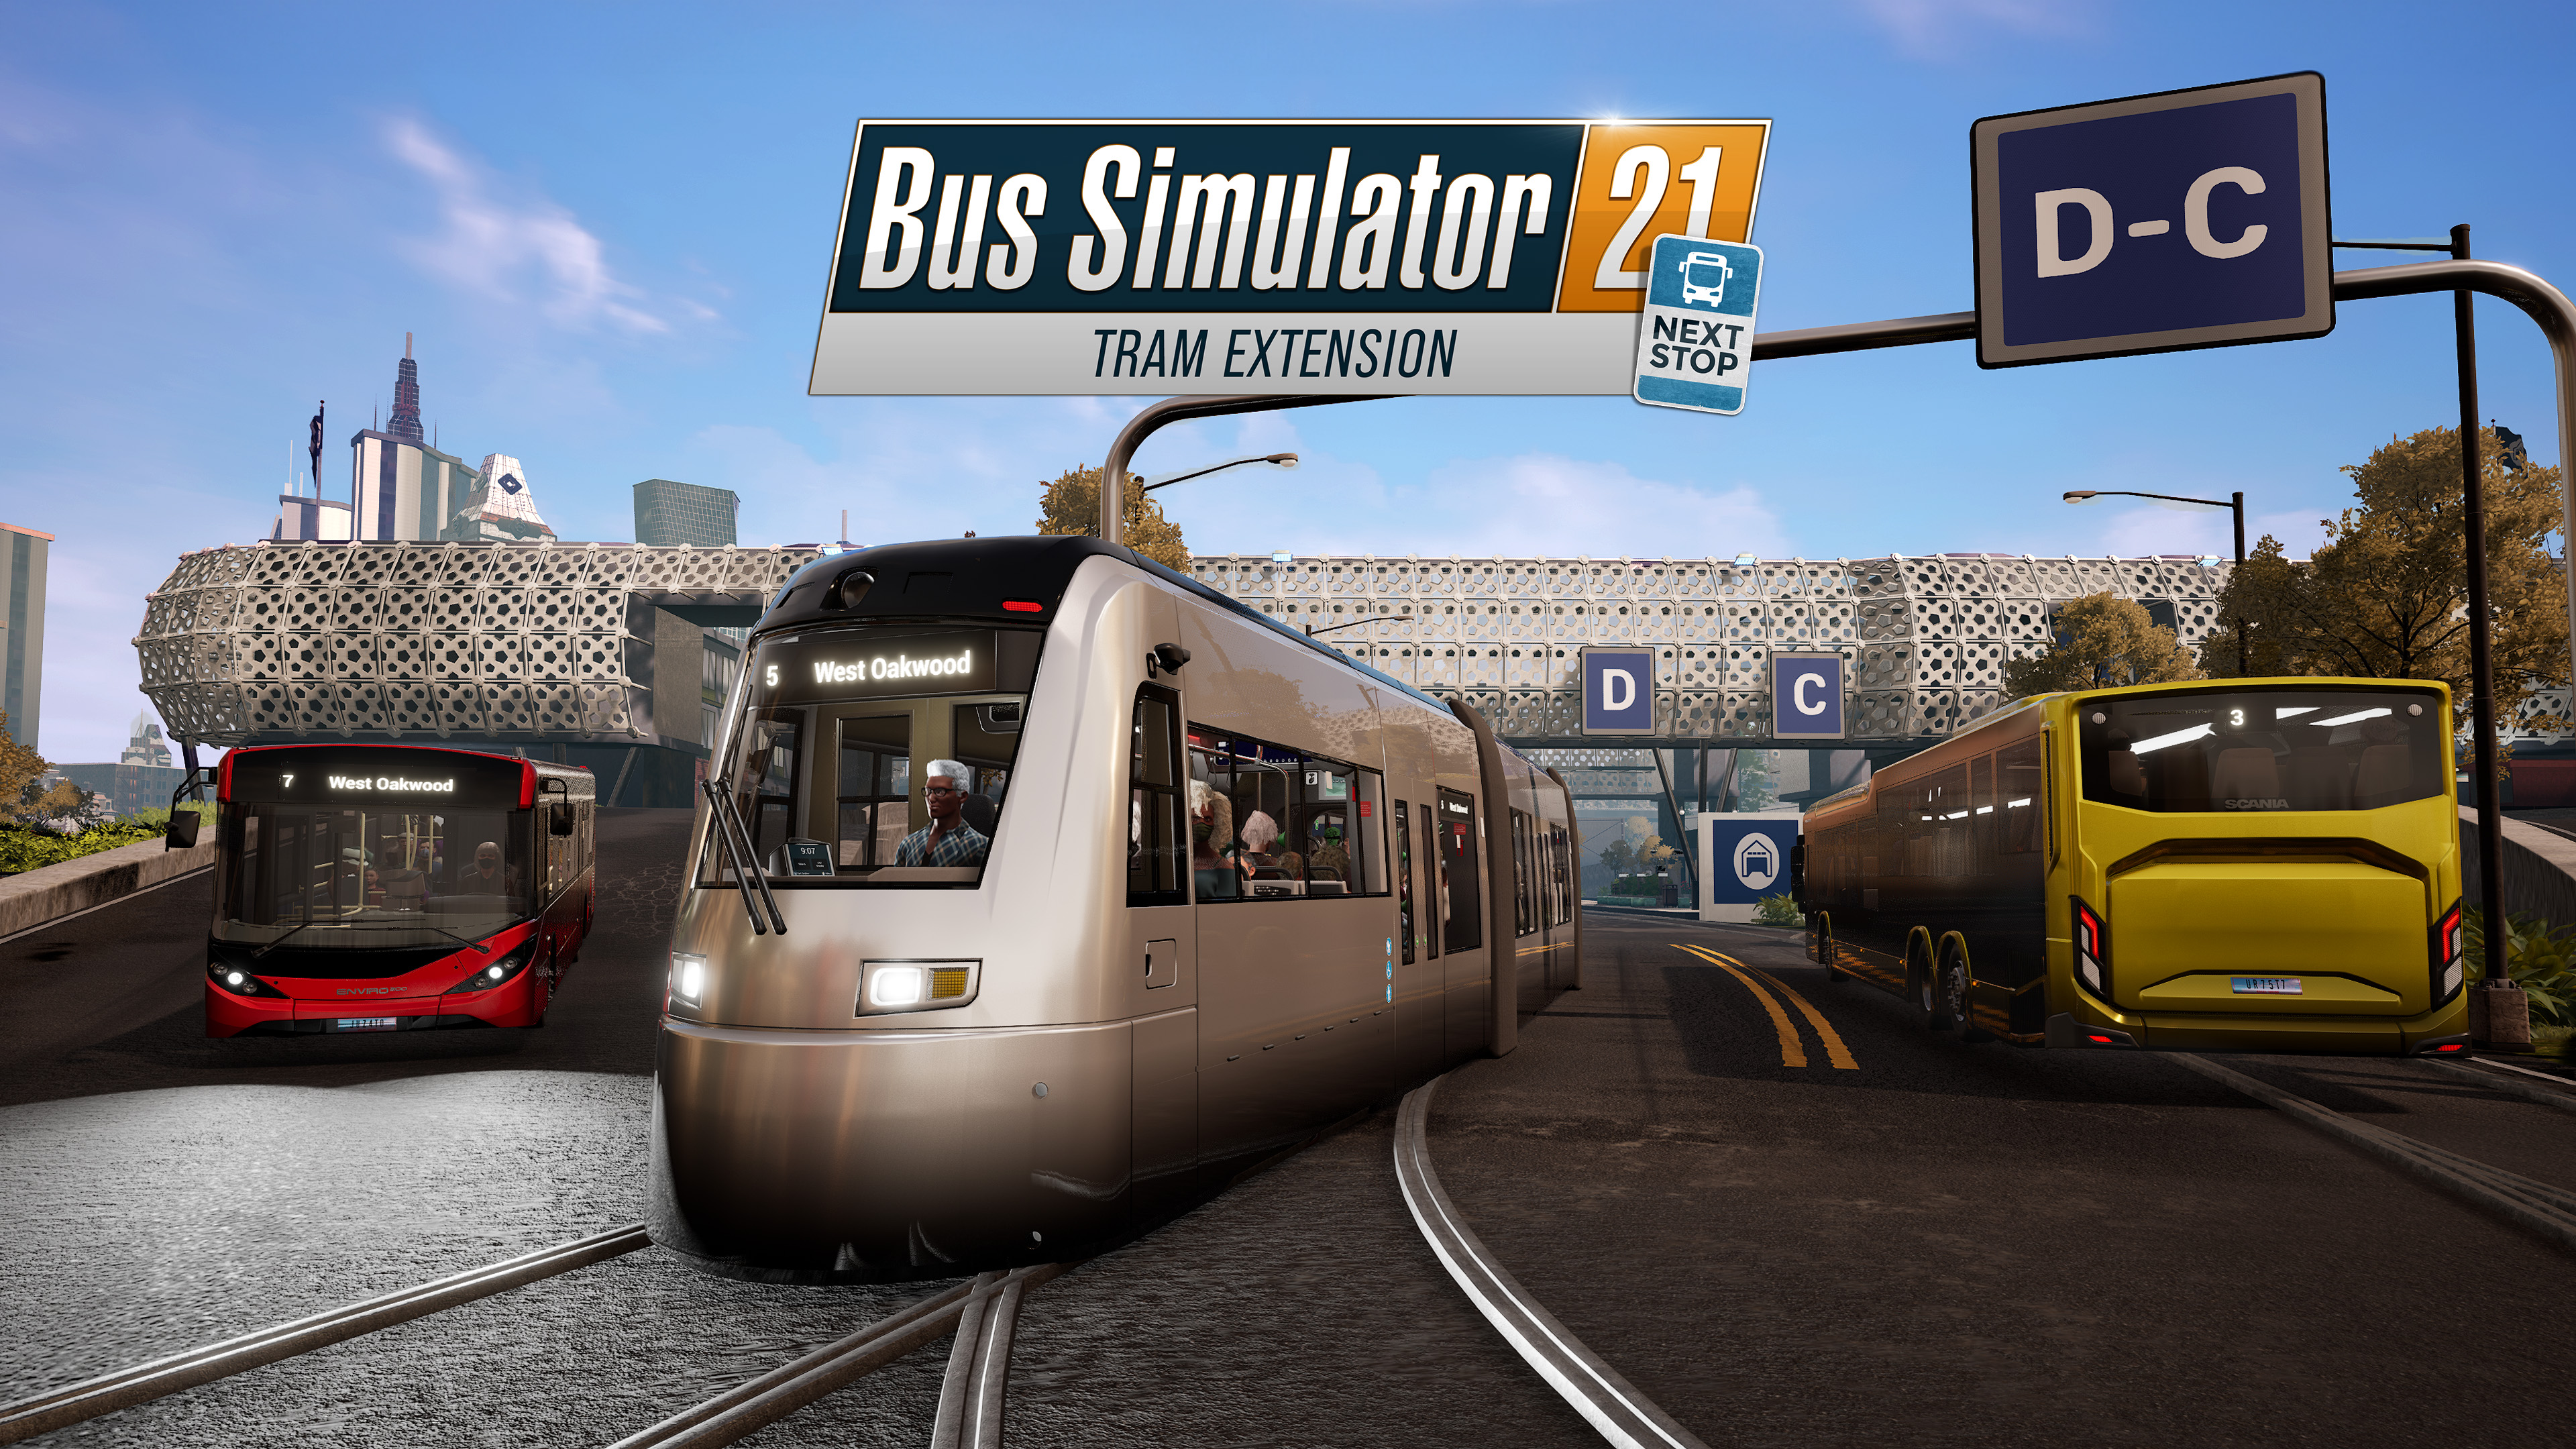 Bus Simulation Channel